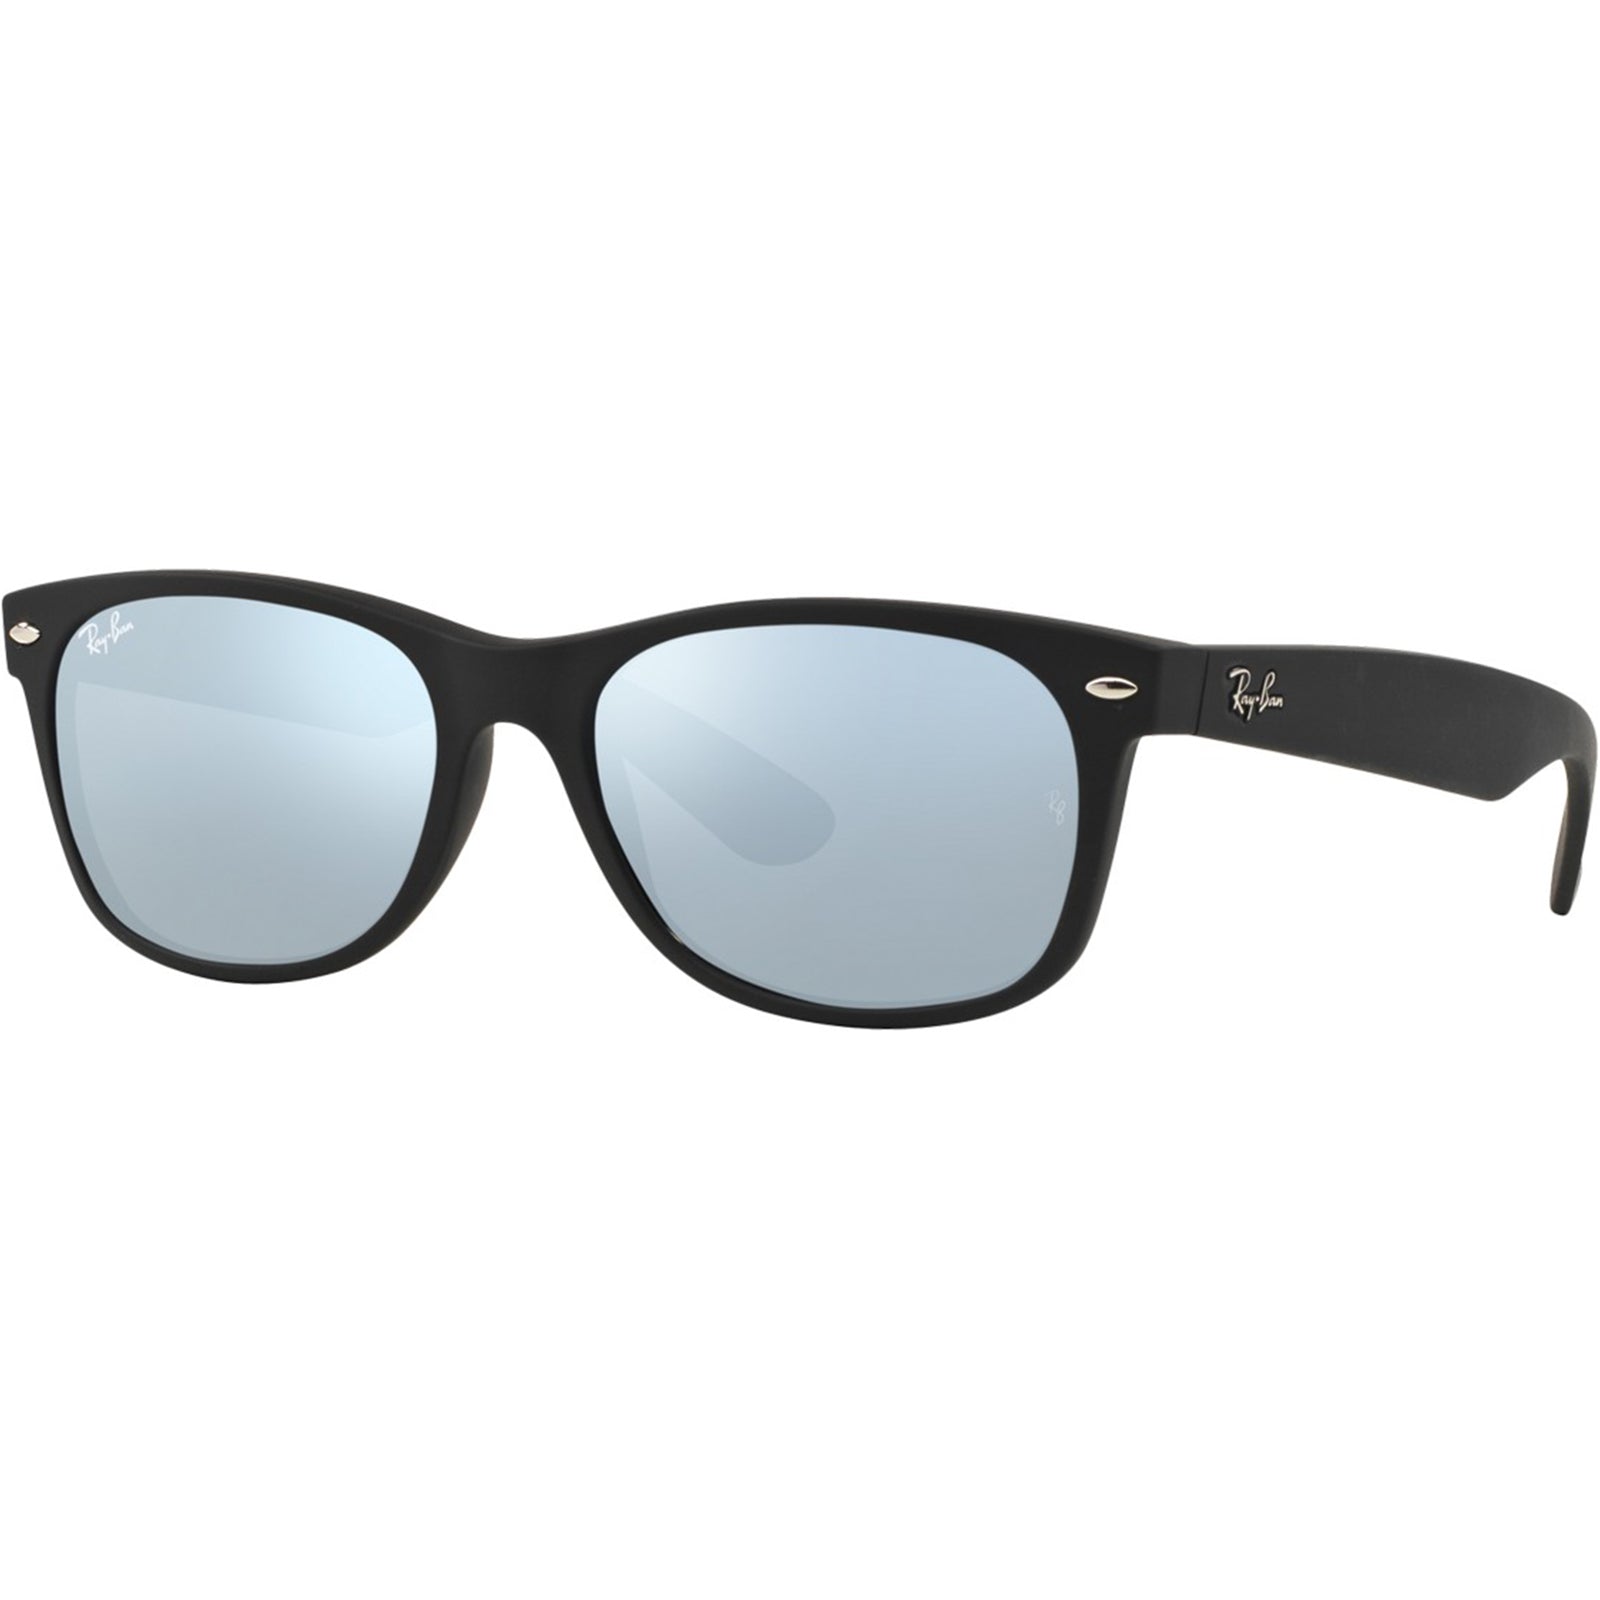 Ray-Ban New Wayfarer Flash Adult Lifestyle Sunglasses-0RB2132